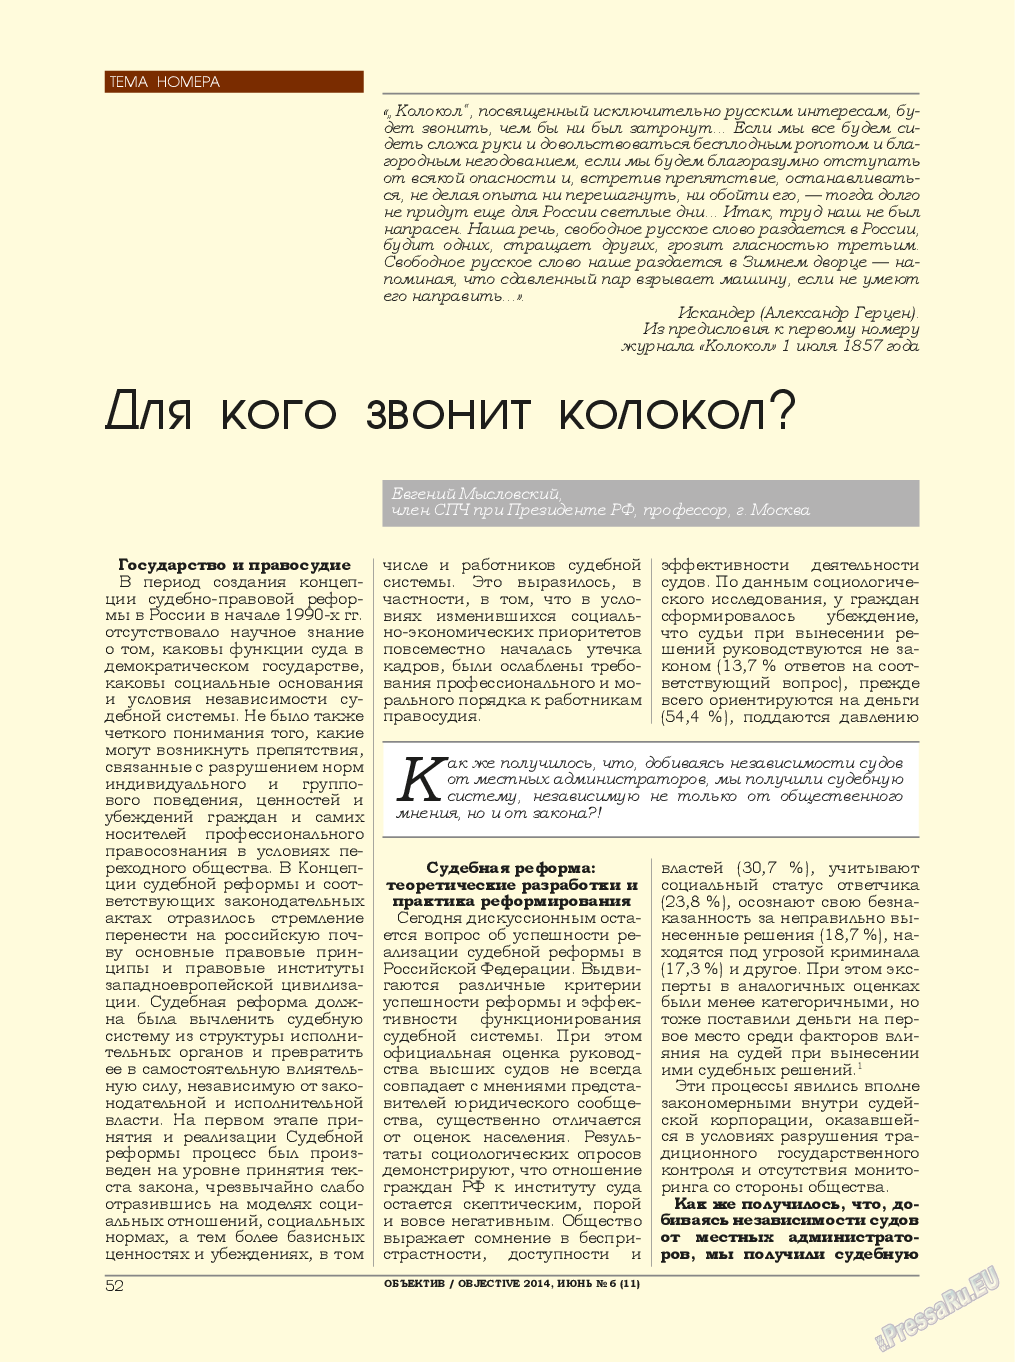 Объектив EU, журнал. 2014 №6 стр.52